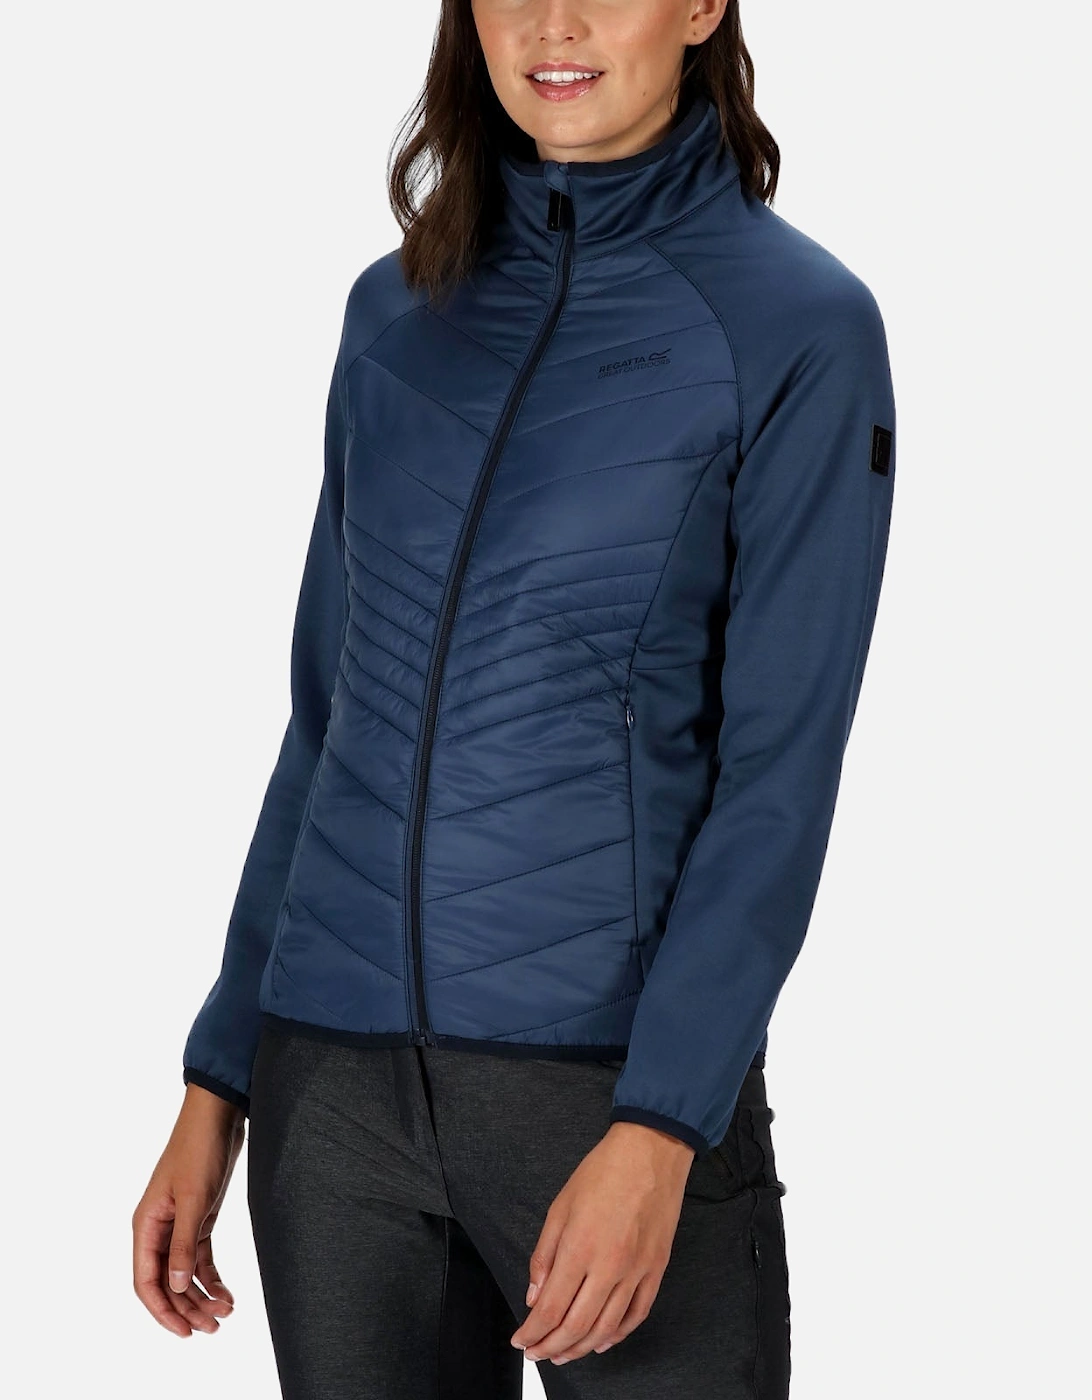 Womens Clumber Hybrid Insulated Walking Jacket - Denim